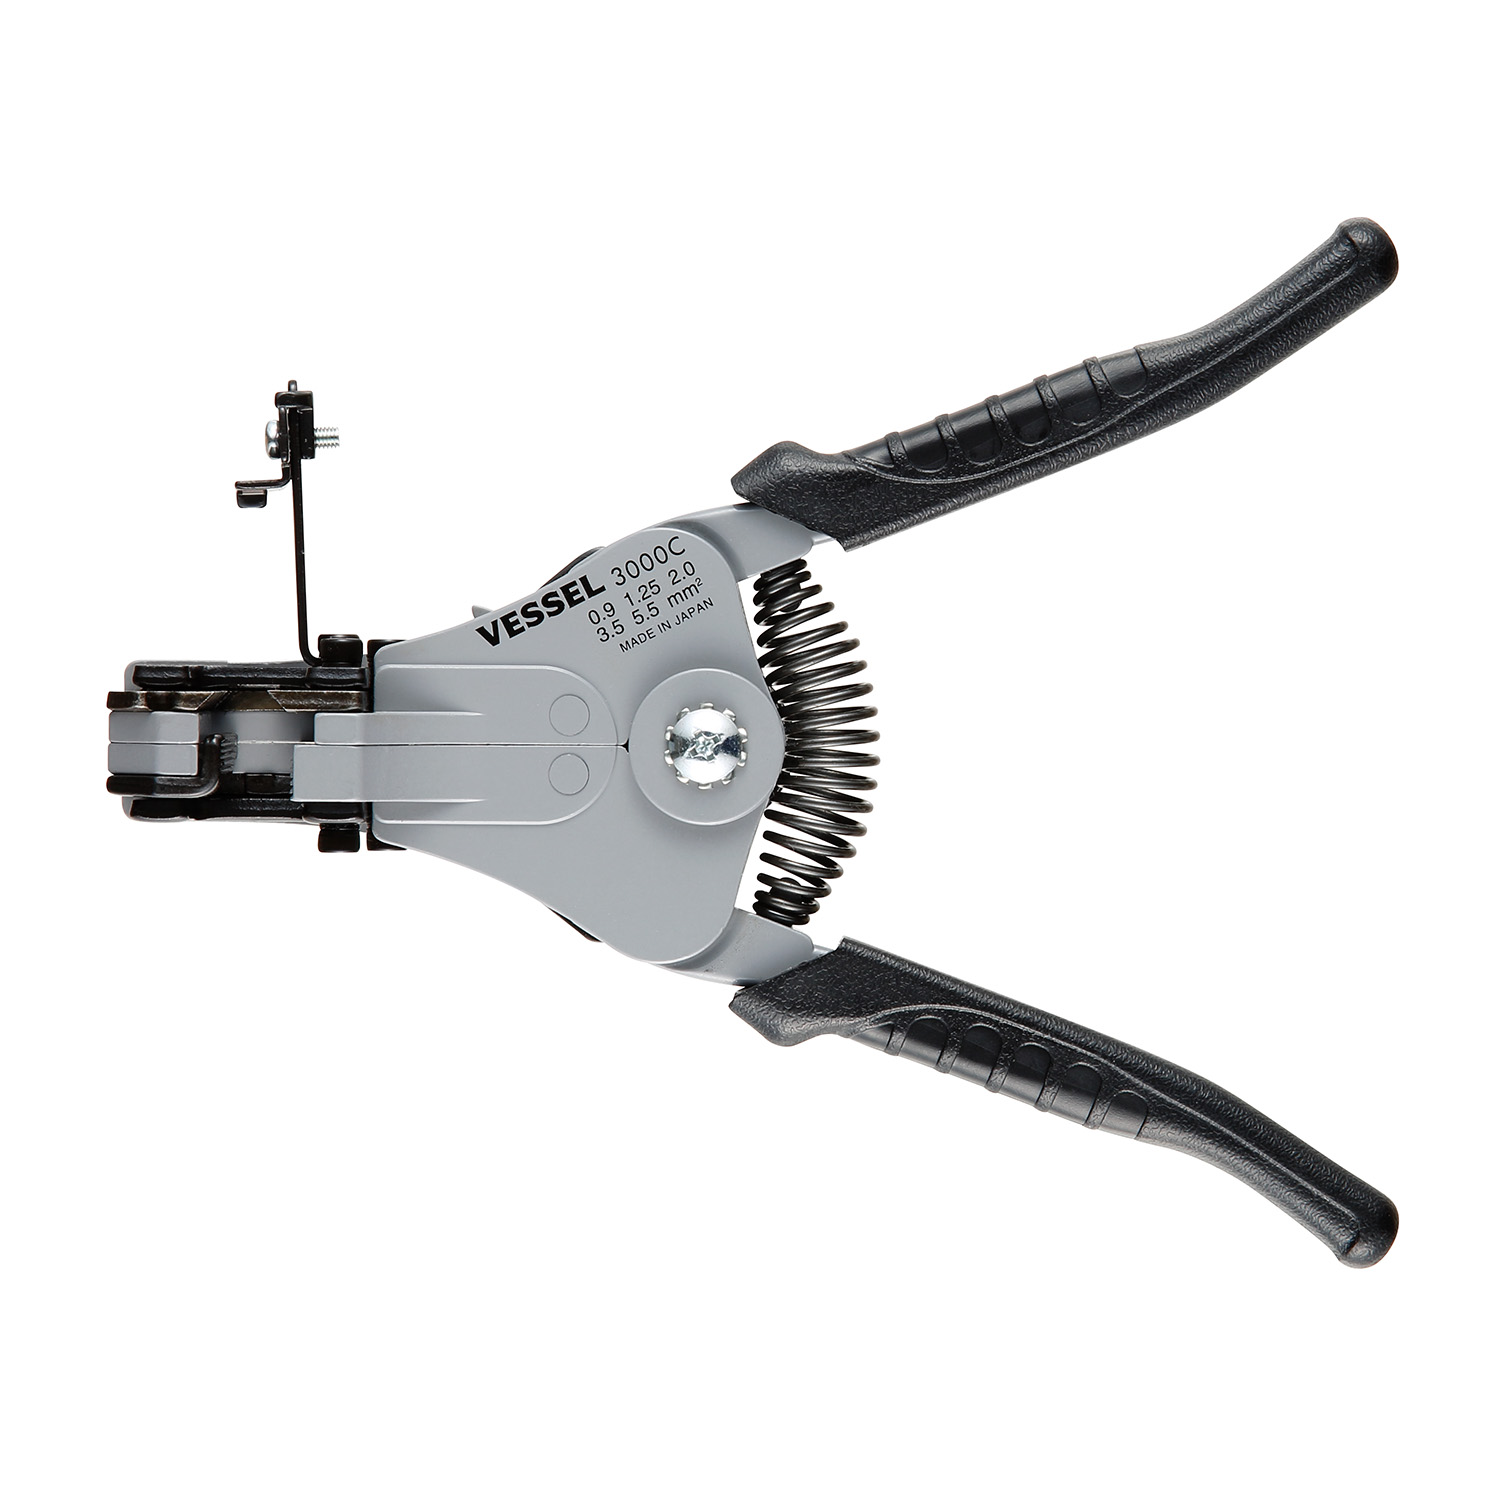 VESSEL JAPAN 3000C Wire Stripper C type crimping tool molex 